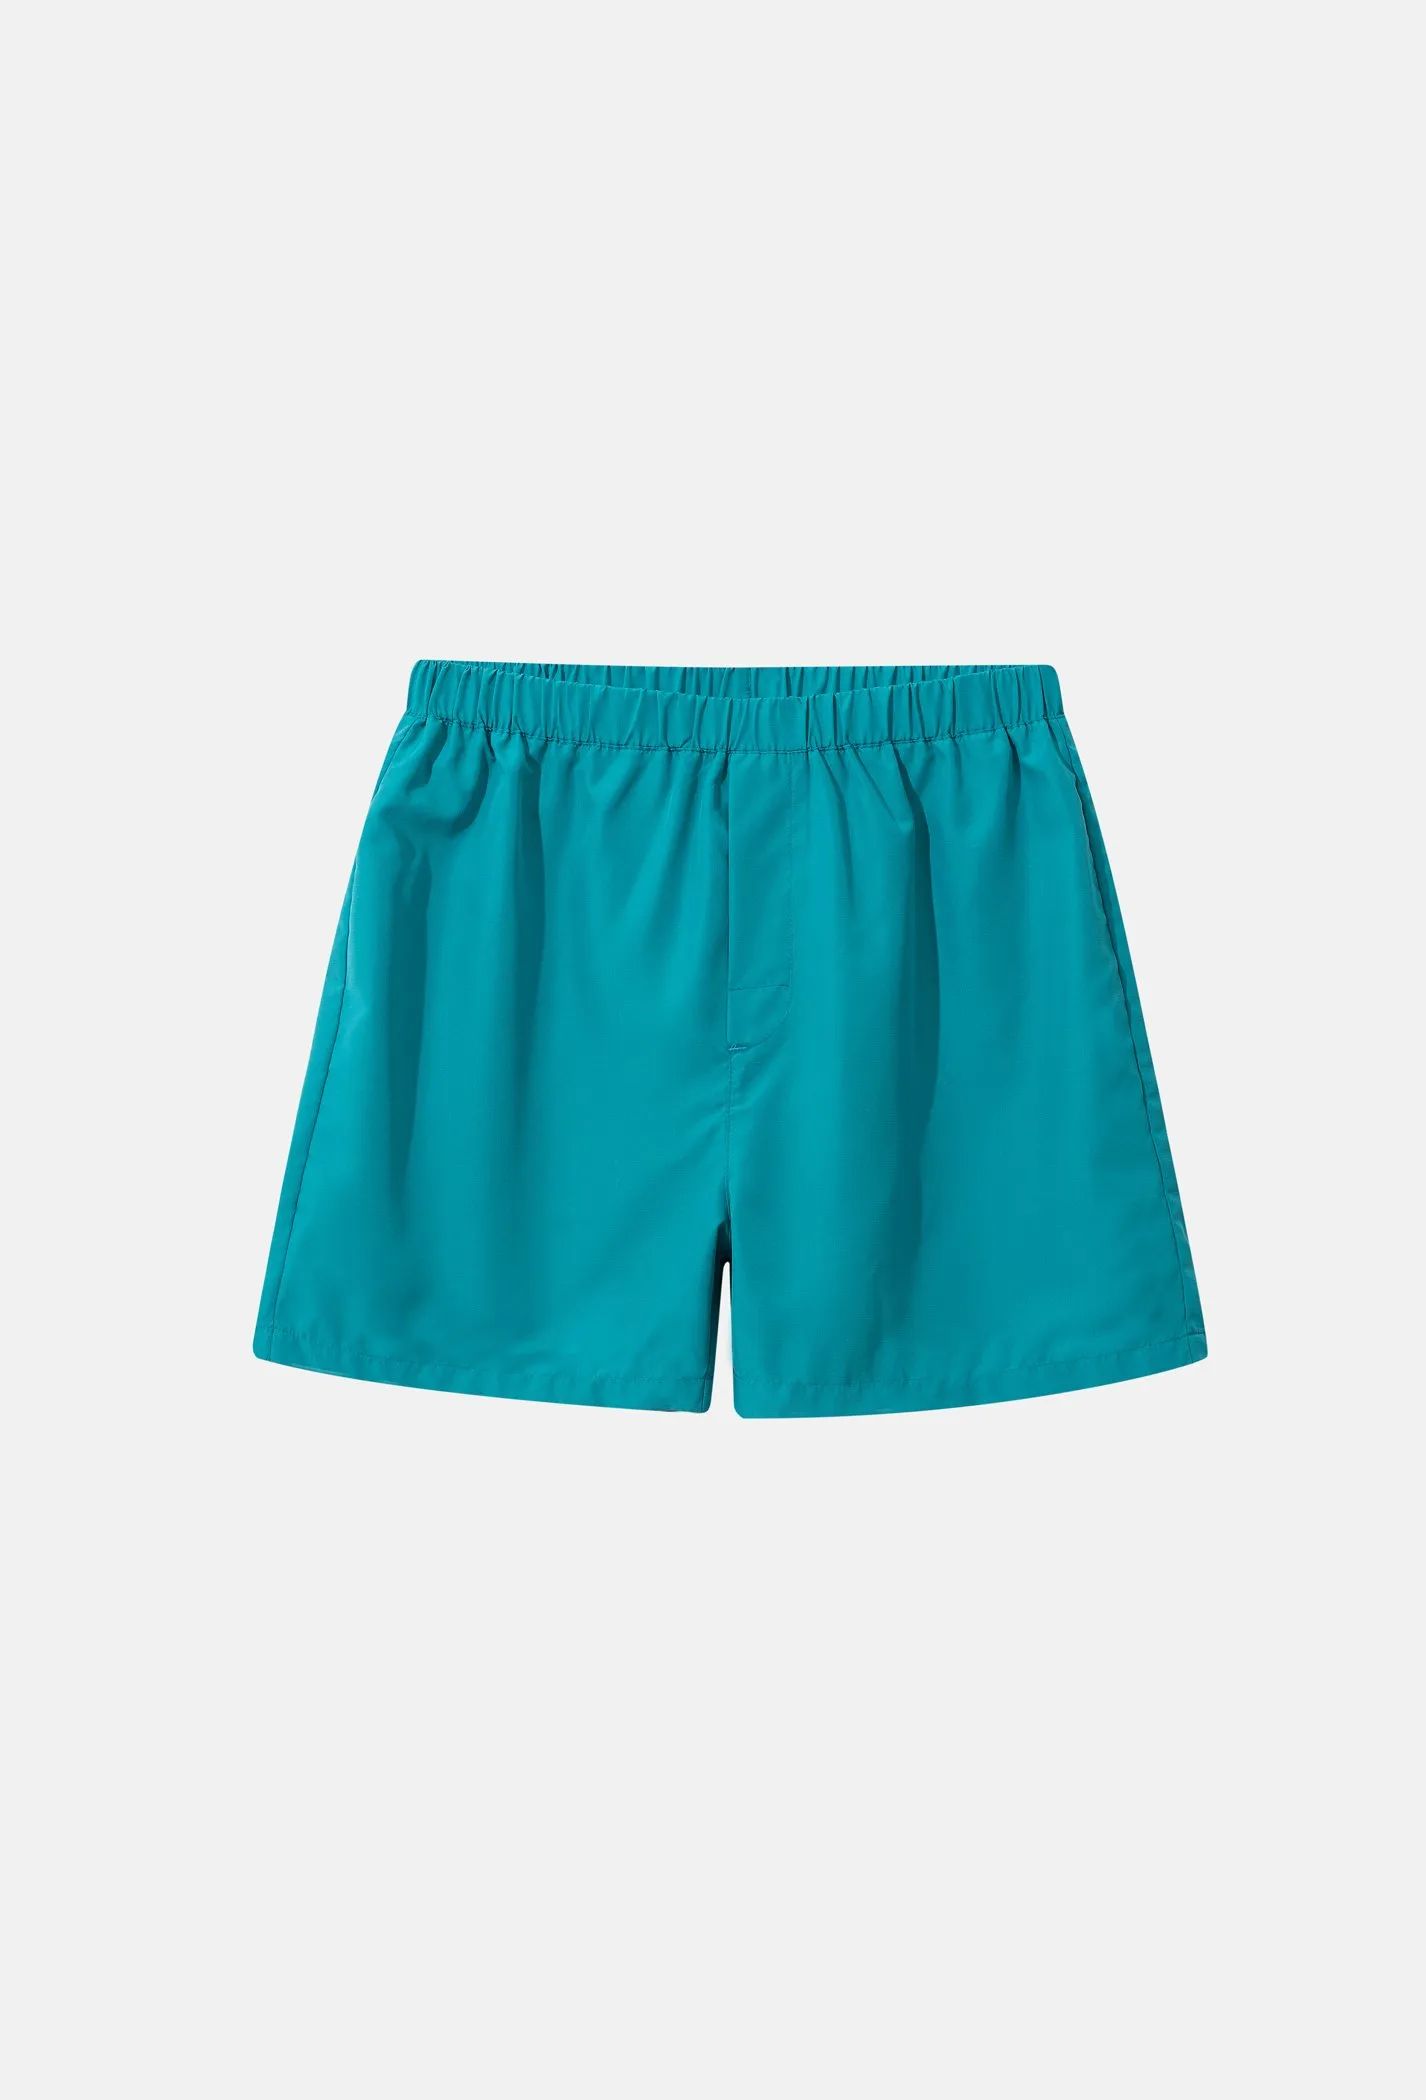 Combo 3 Shorts mặc nhà Basics  2